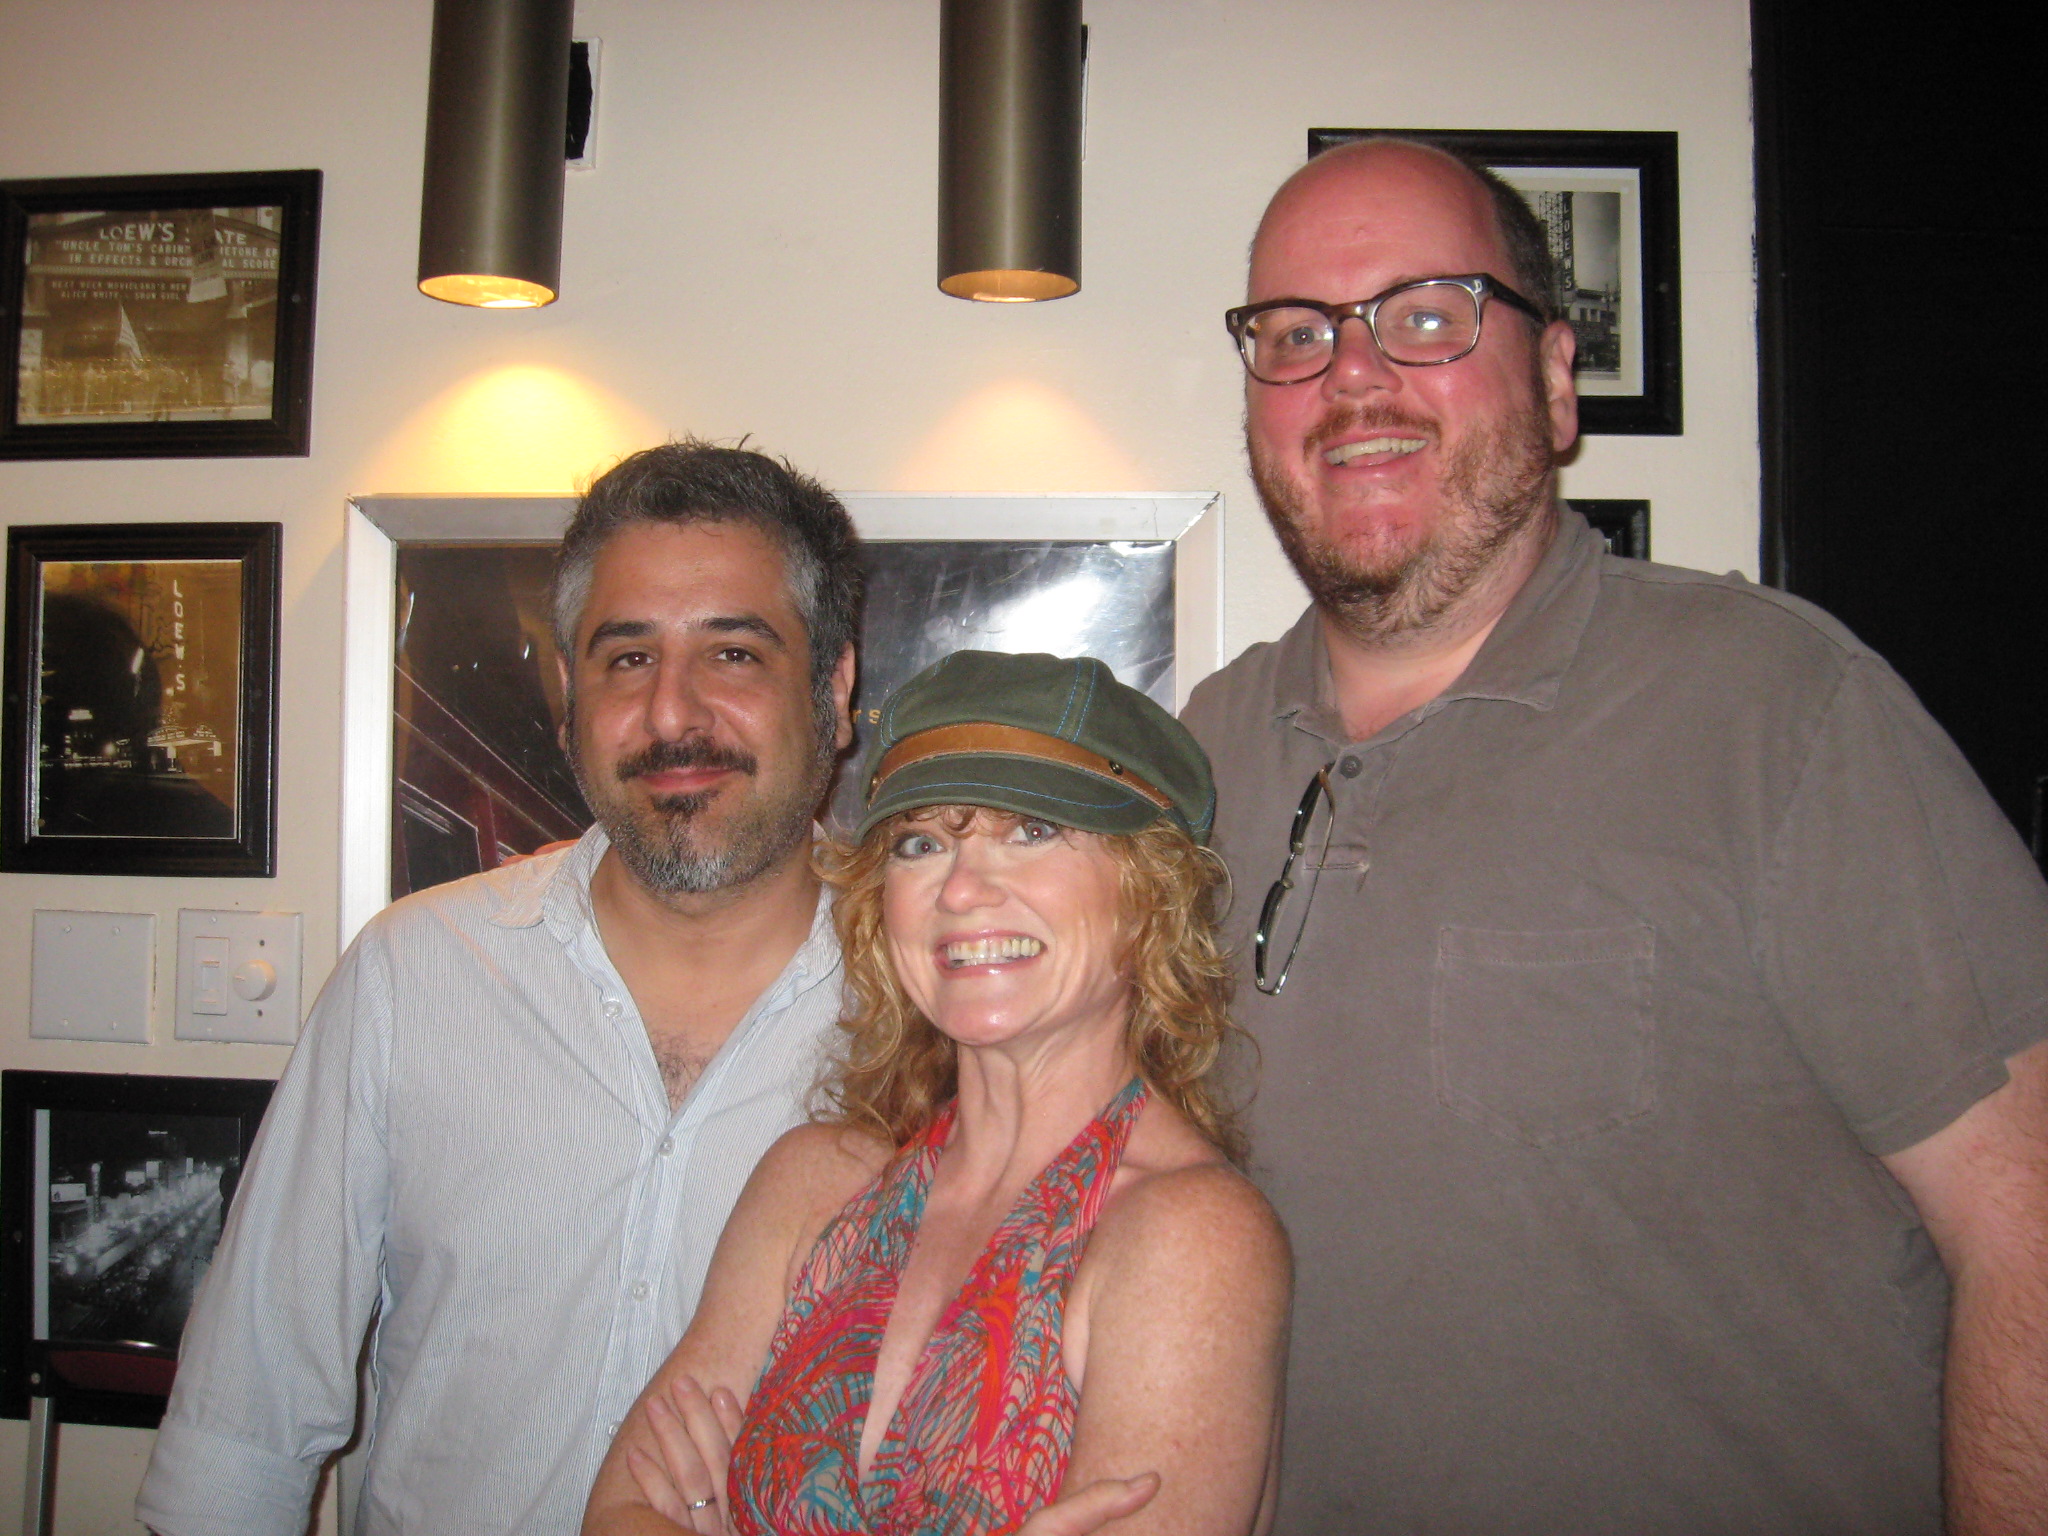 Glenn Ficarra, John Requa and Morgana Shaw at New Orleans screening of I LOVE YOU PHILLIP MORRIS